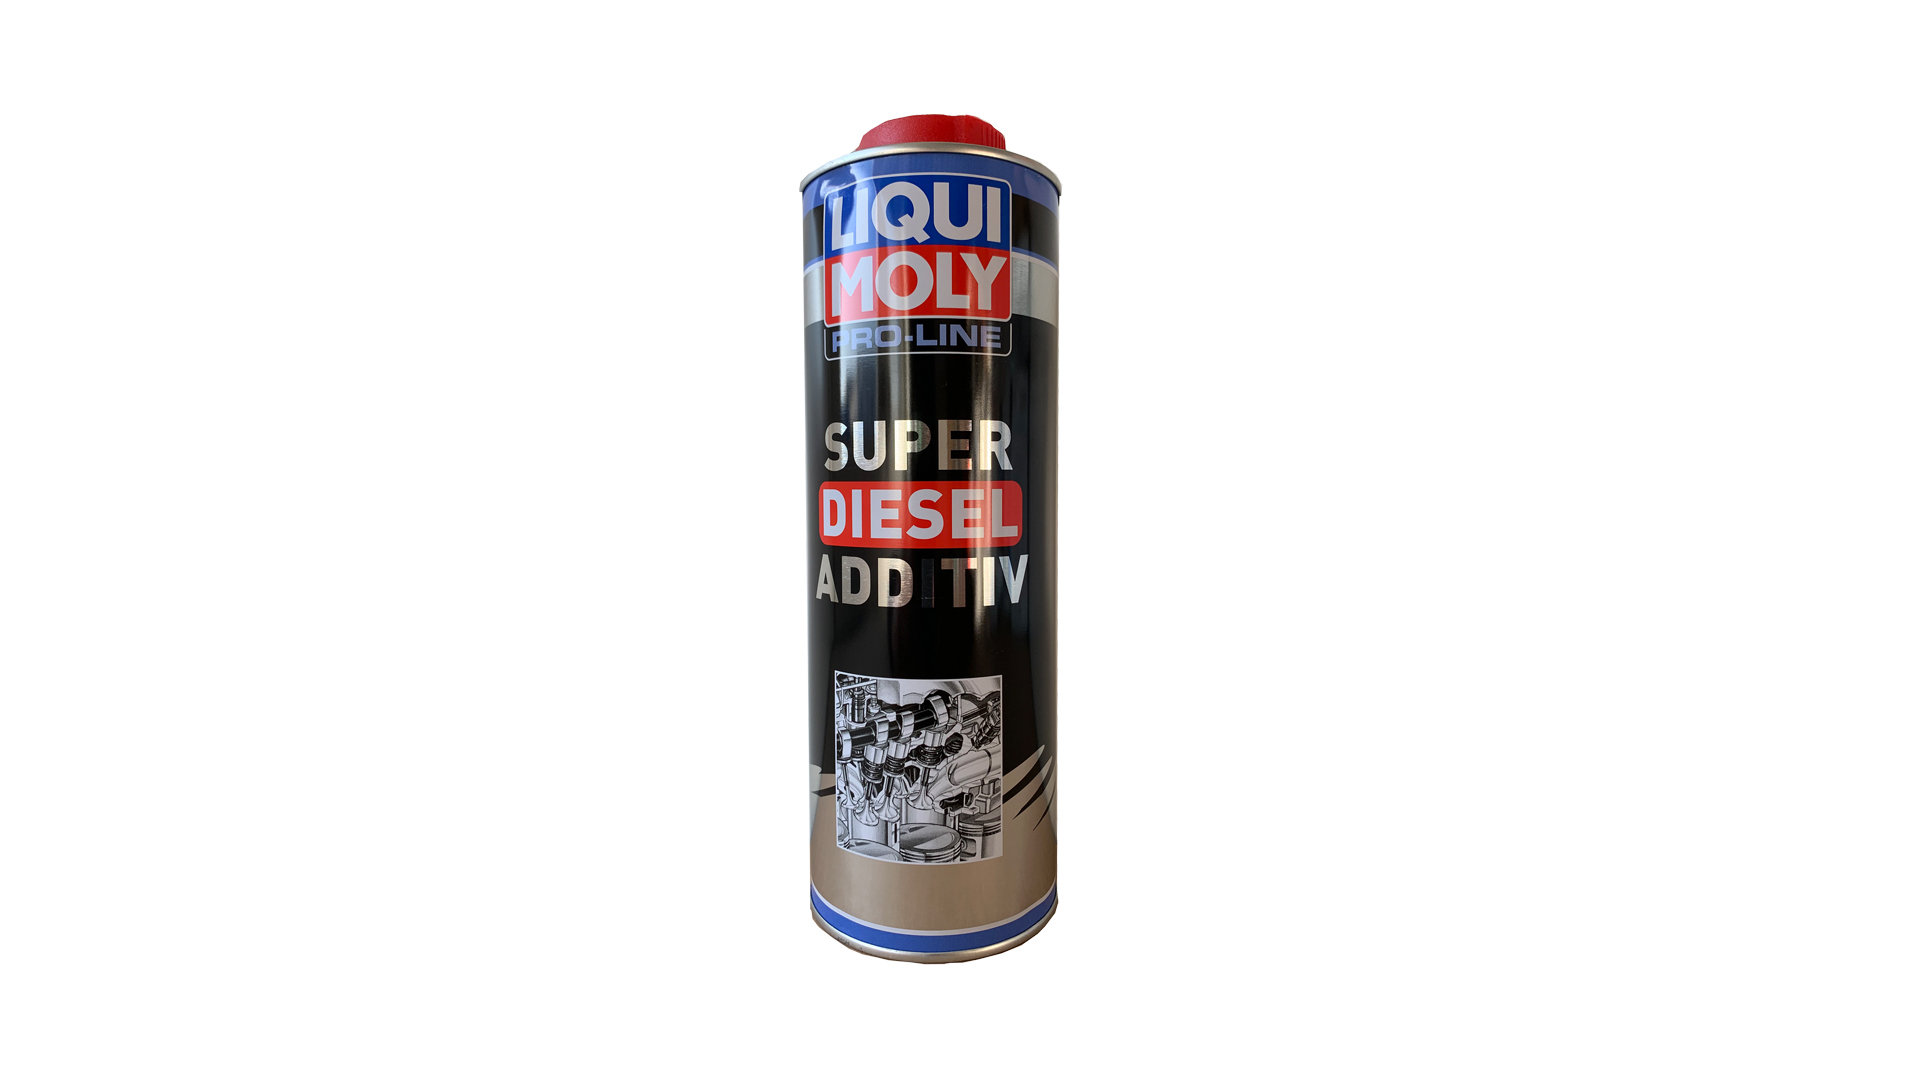 LIQUI MOLY 5176 Pro Line Super Diesel Additiv 1 l-Topseller